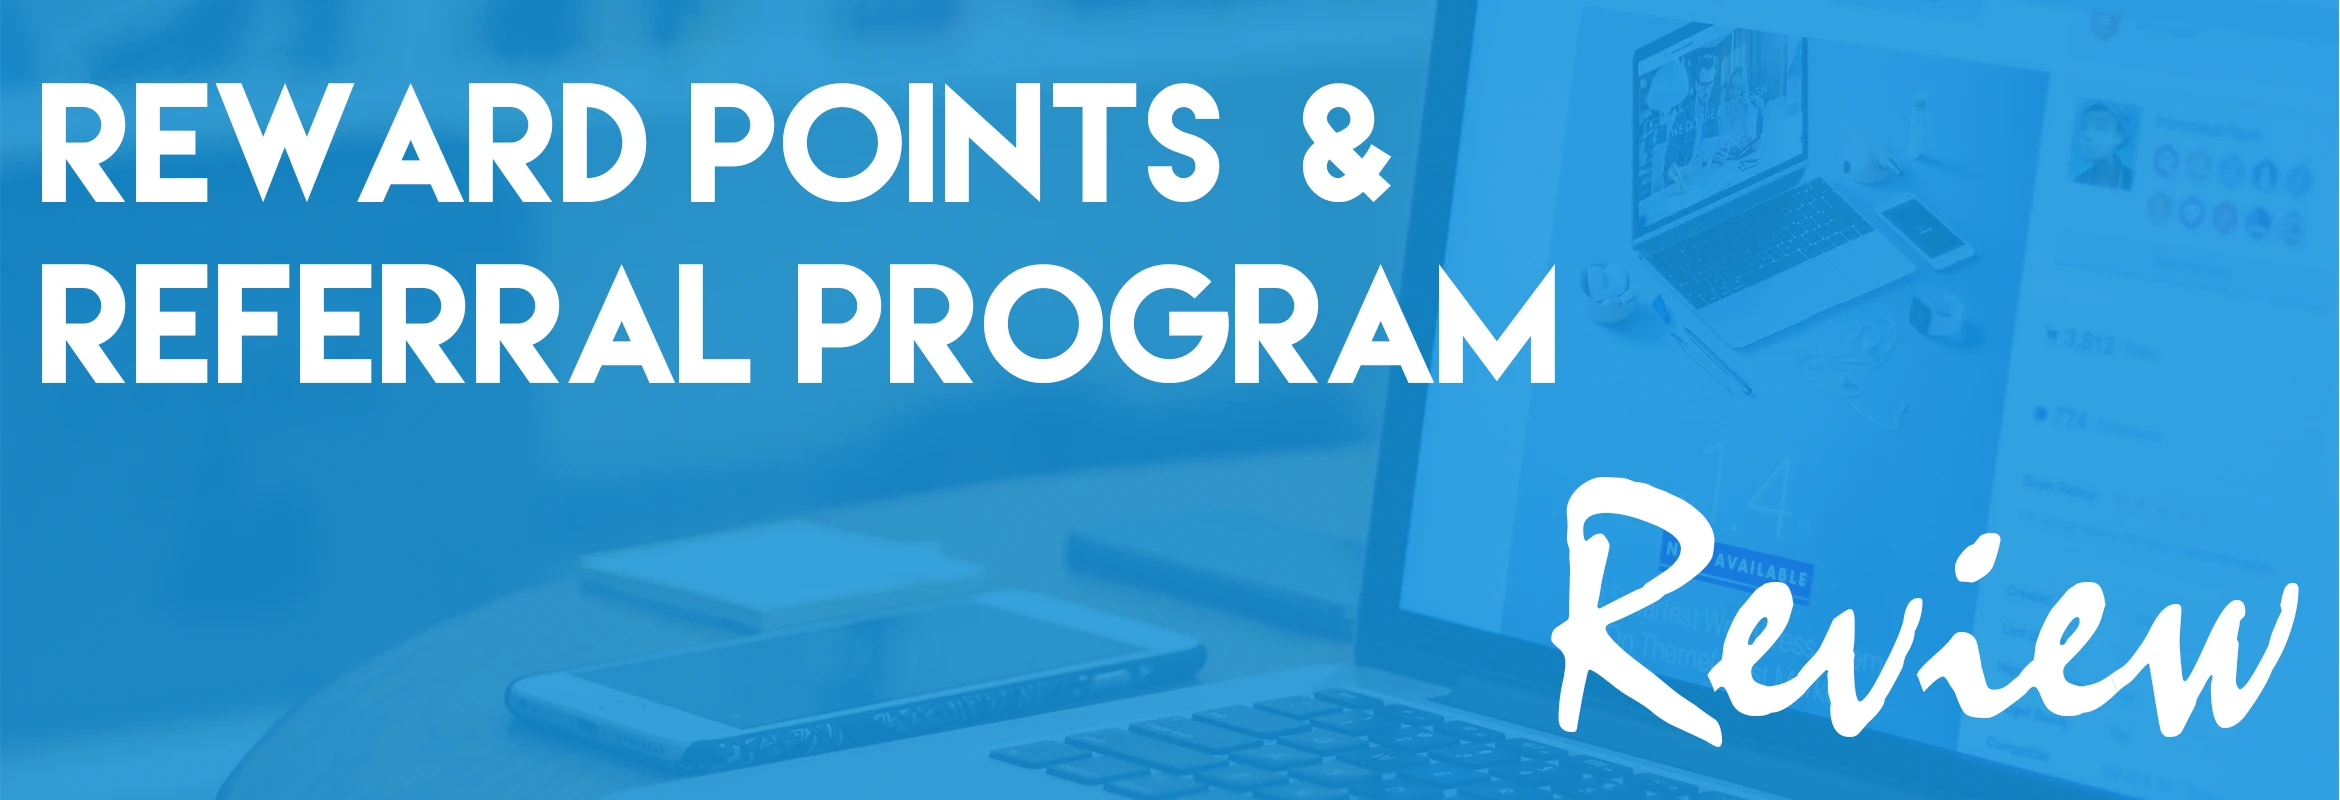 Adding Value Loyalty Program For Magento Store: Reward Points + Referral Program